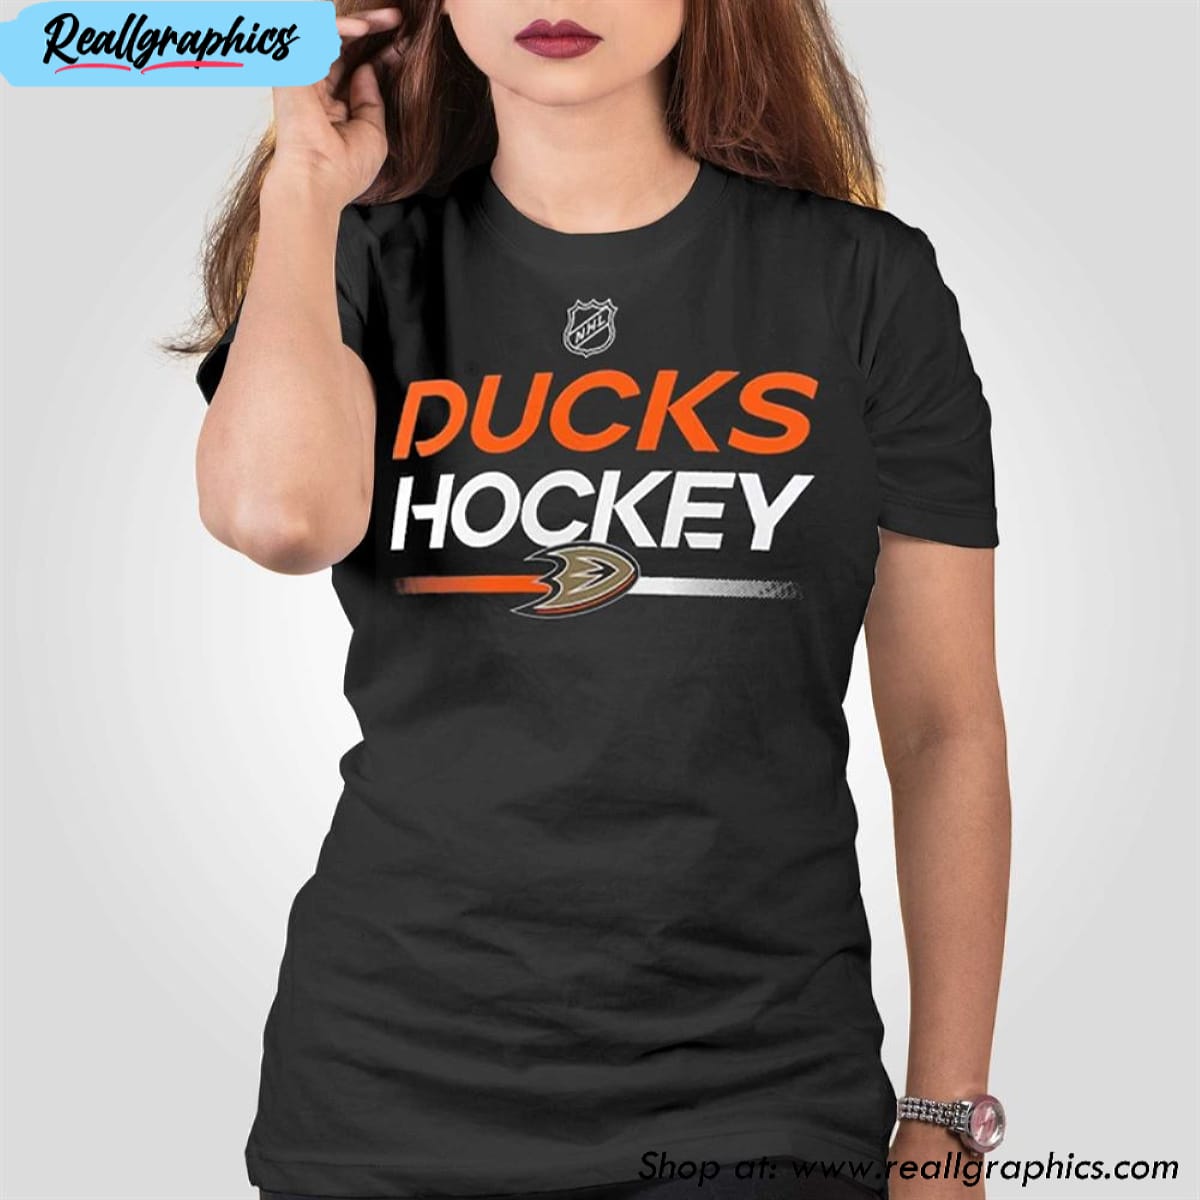 Anaheim Ducks Apparel, Ducks Gear, Anaheim Ducks Shop